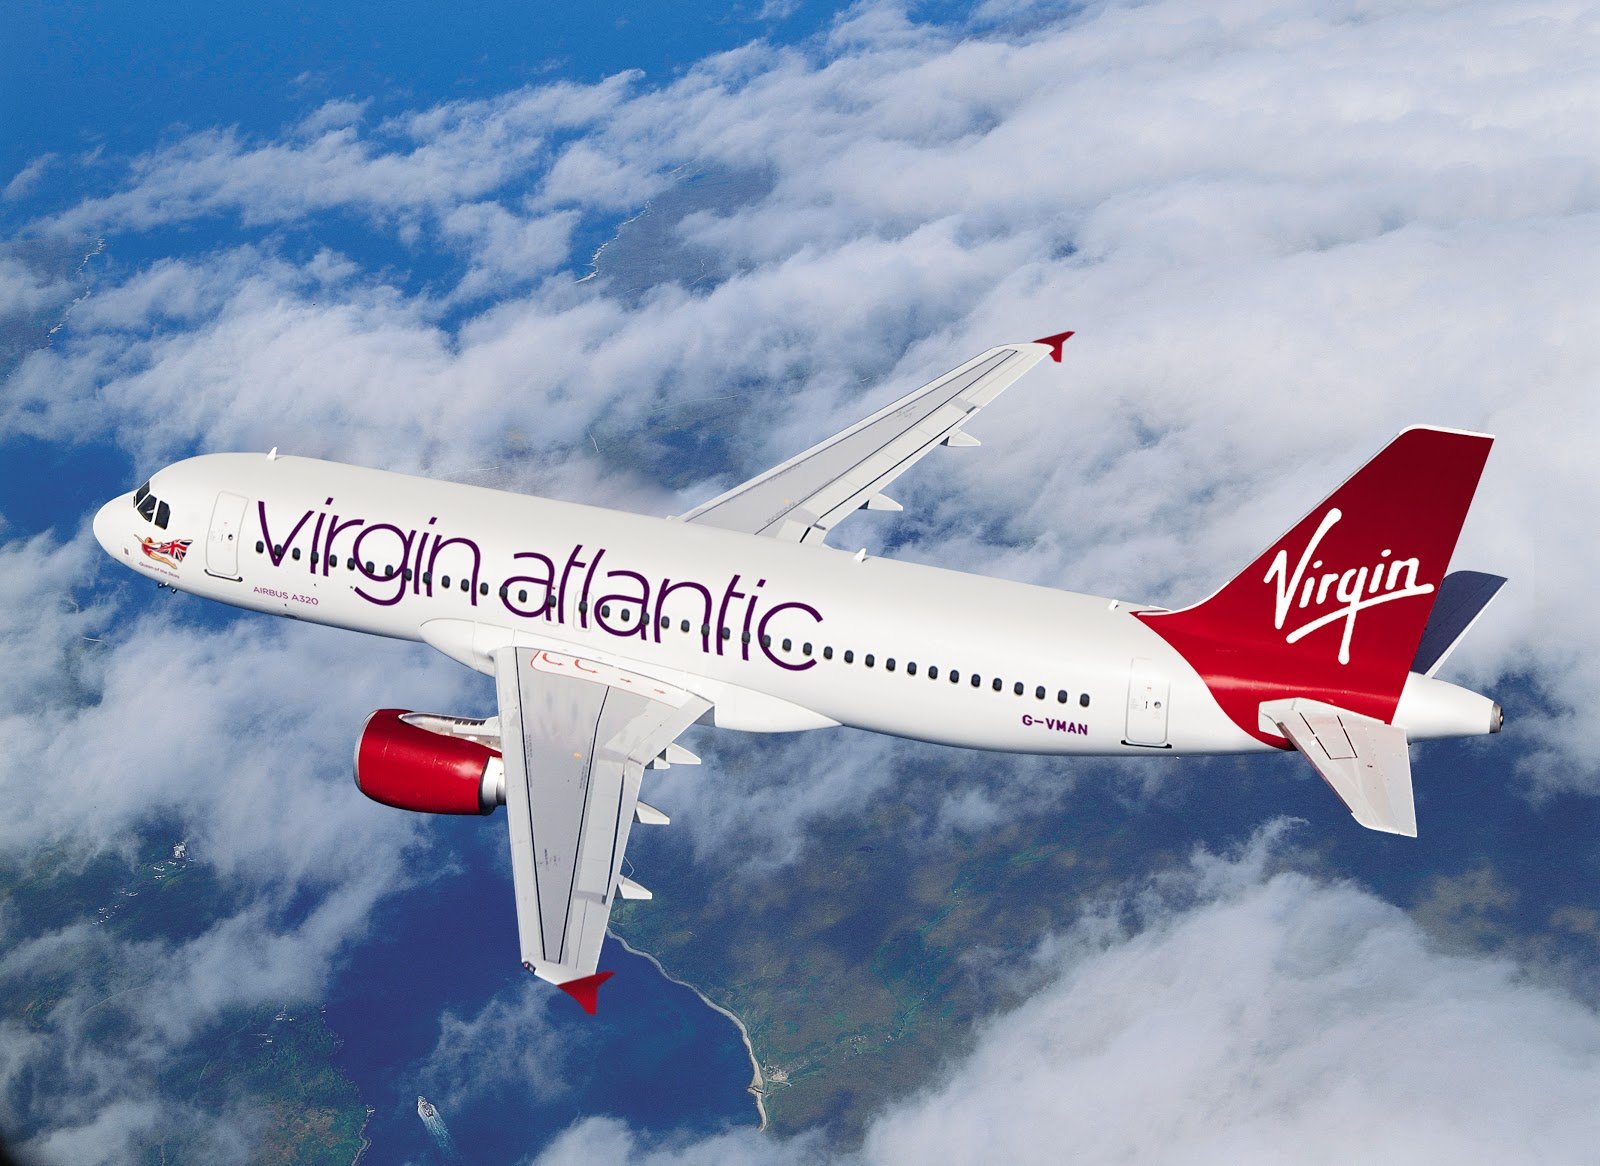 Virgin Atlantic #photos #trend of #May